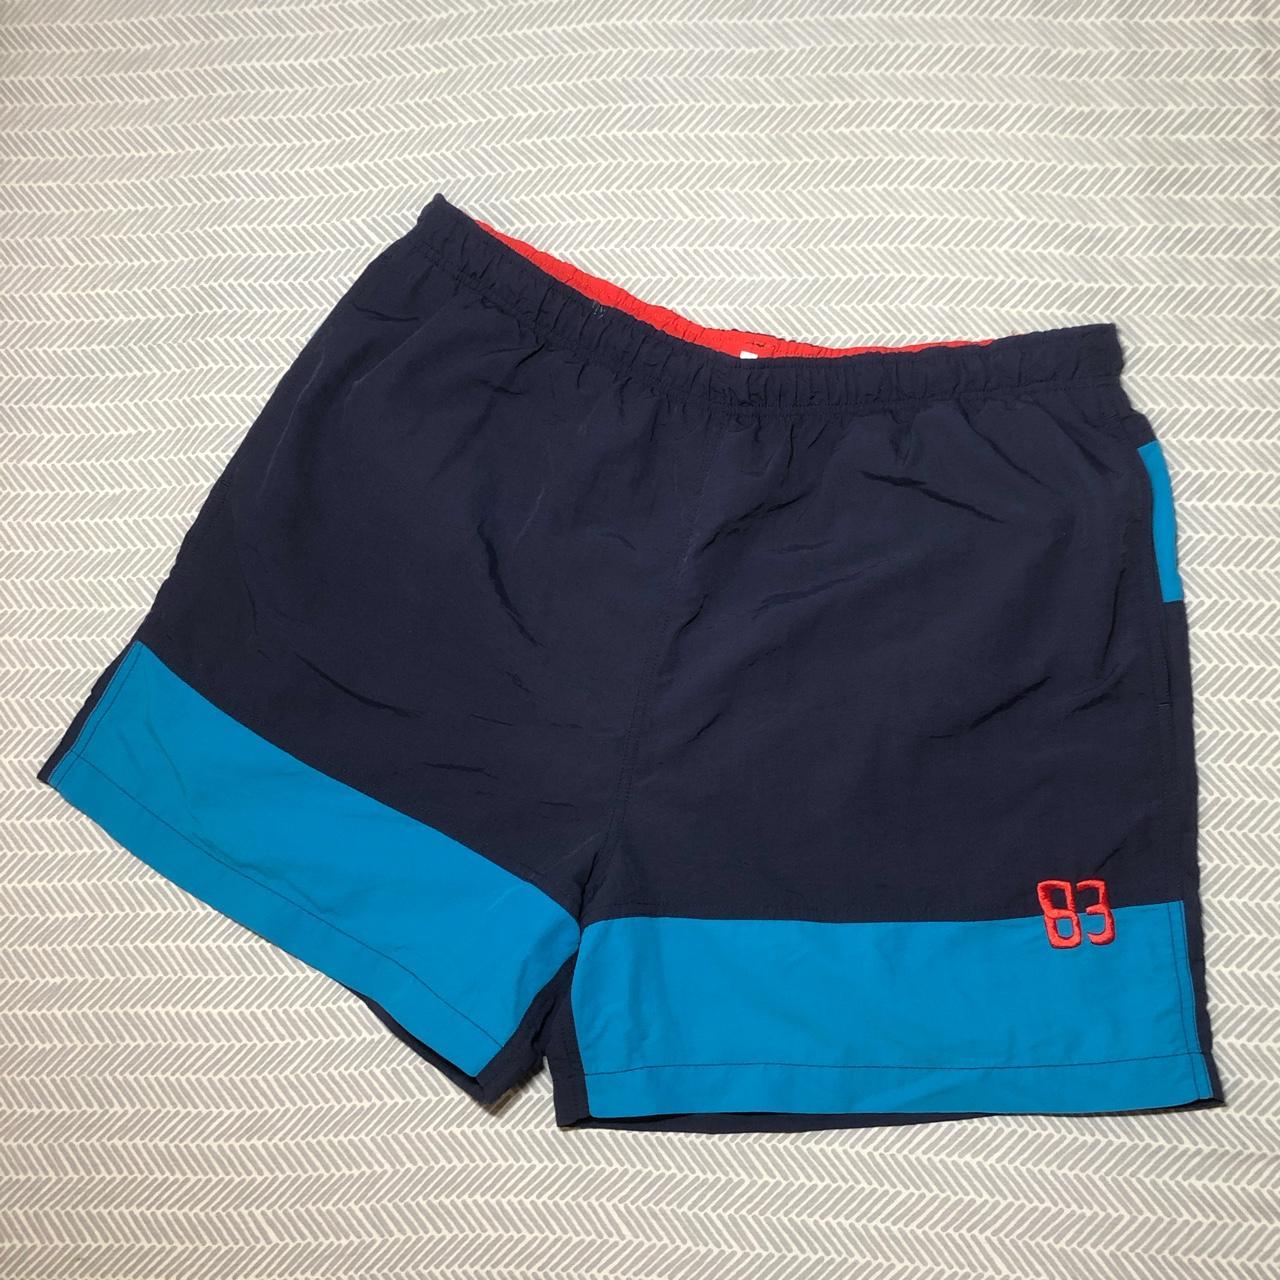 Nautica Men's Navy and Blue Swim-briefs-shorts - 1